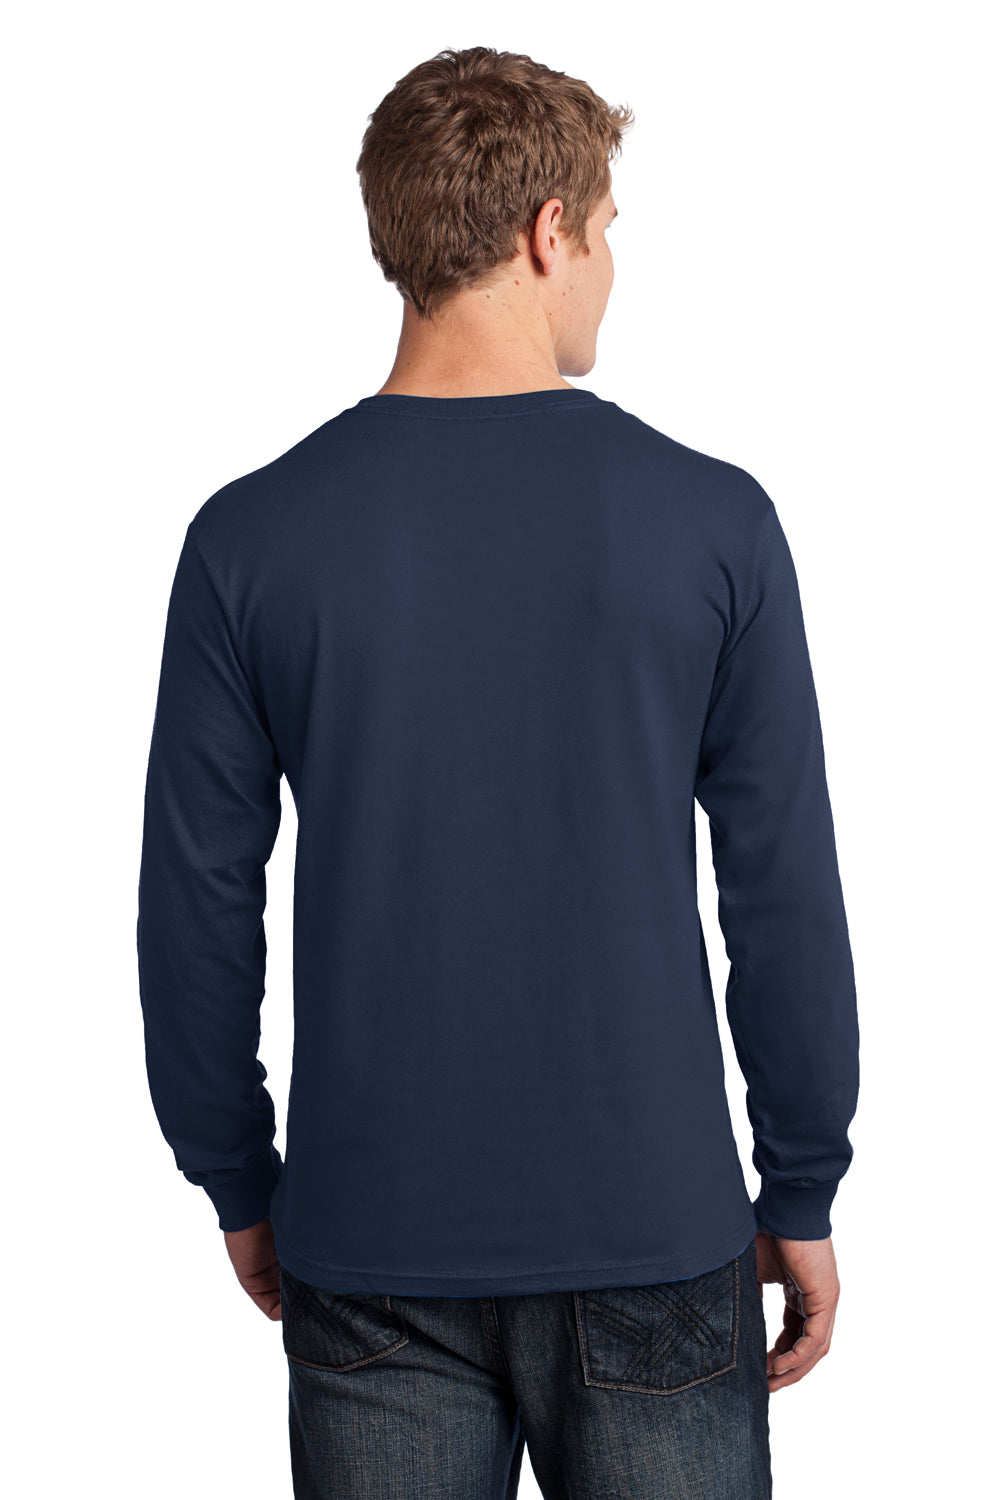 Port & Company PC54LS Mens Core Long Sleeve Crewneck T-Shirt Navy Blue Back